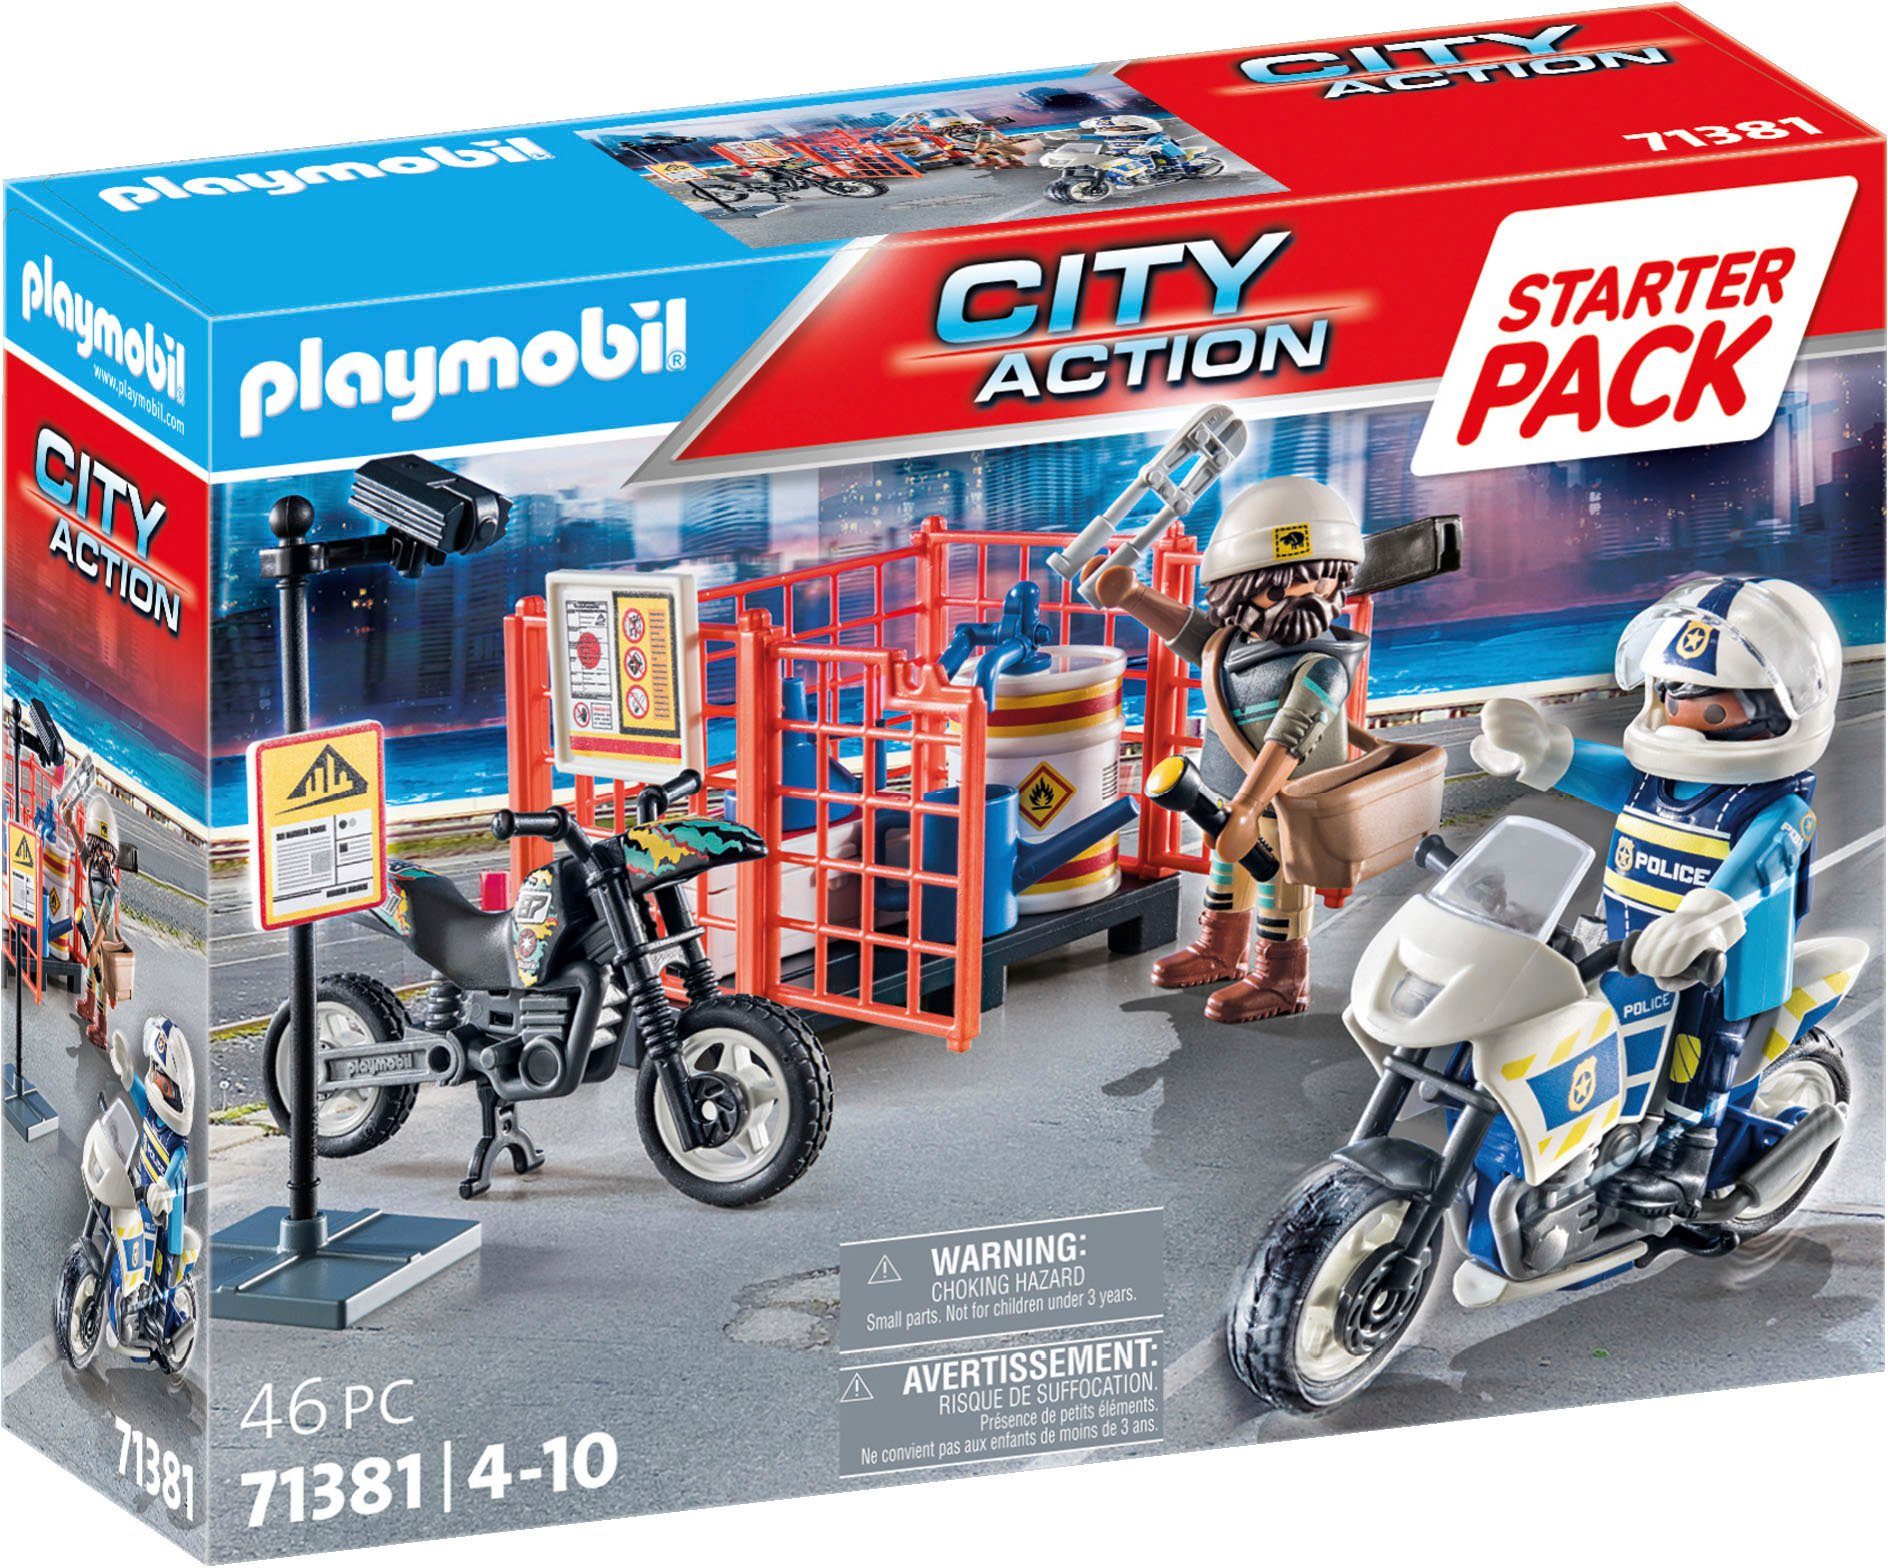 Playmobil® Konstruktions-Spielset Starter Pack, Polizei (71381), City Action, (46 St)